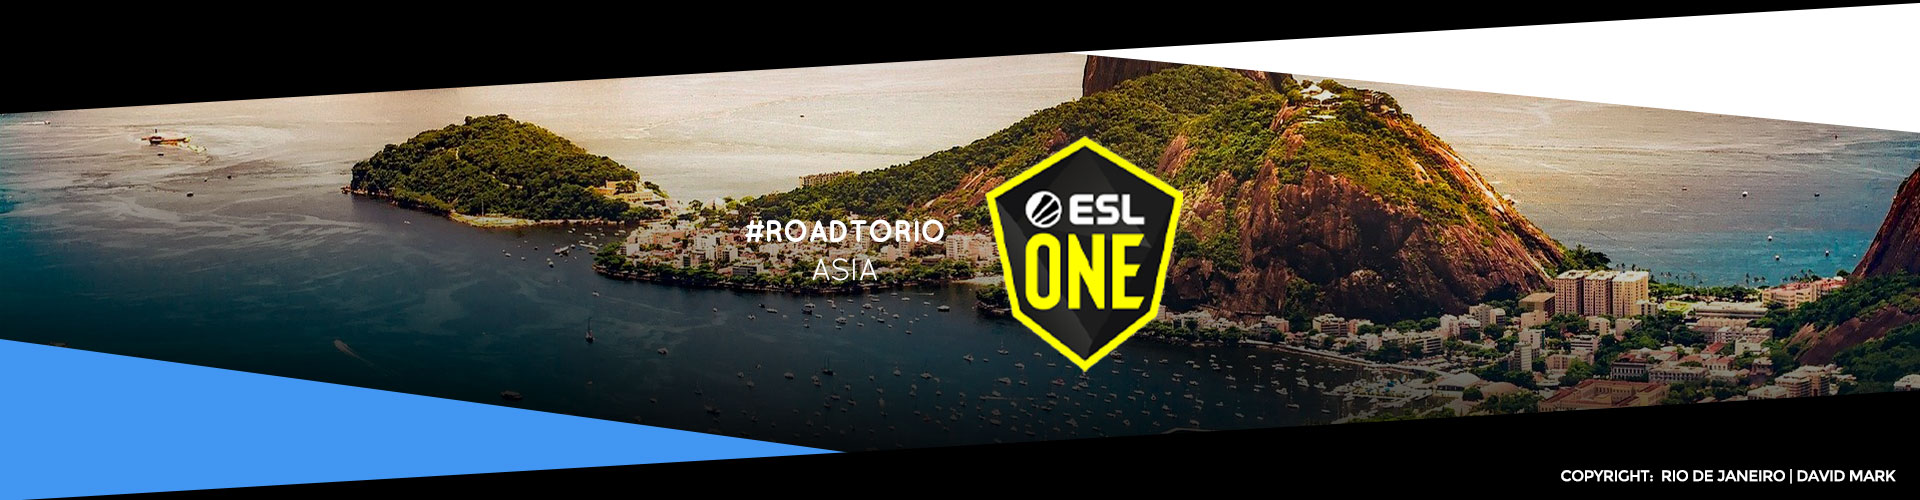 Eventsida för asiatiska ESL One: Road to Rio